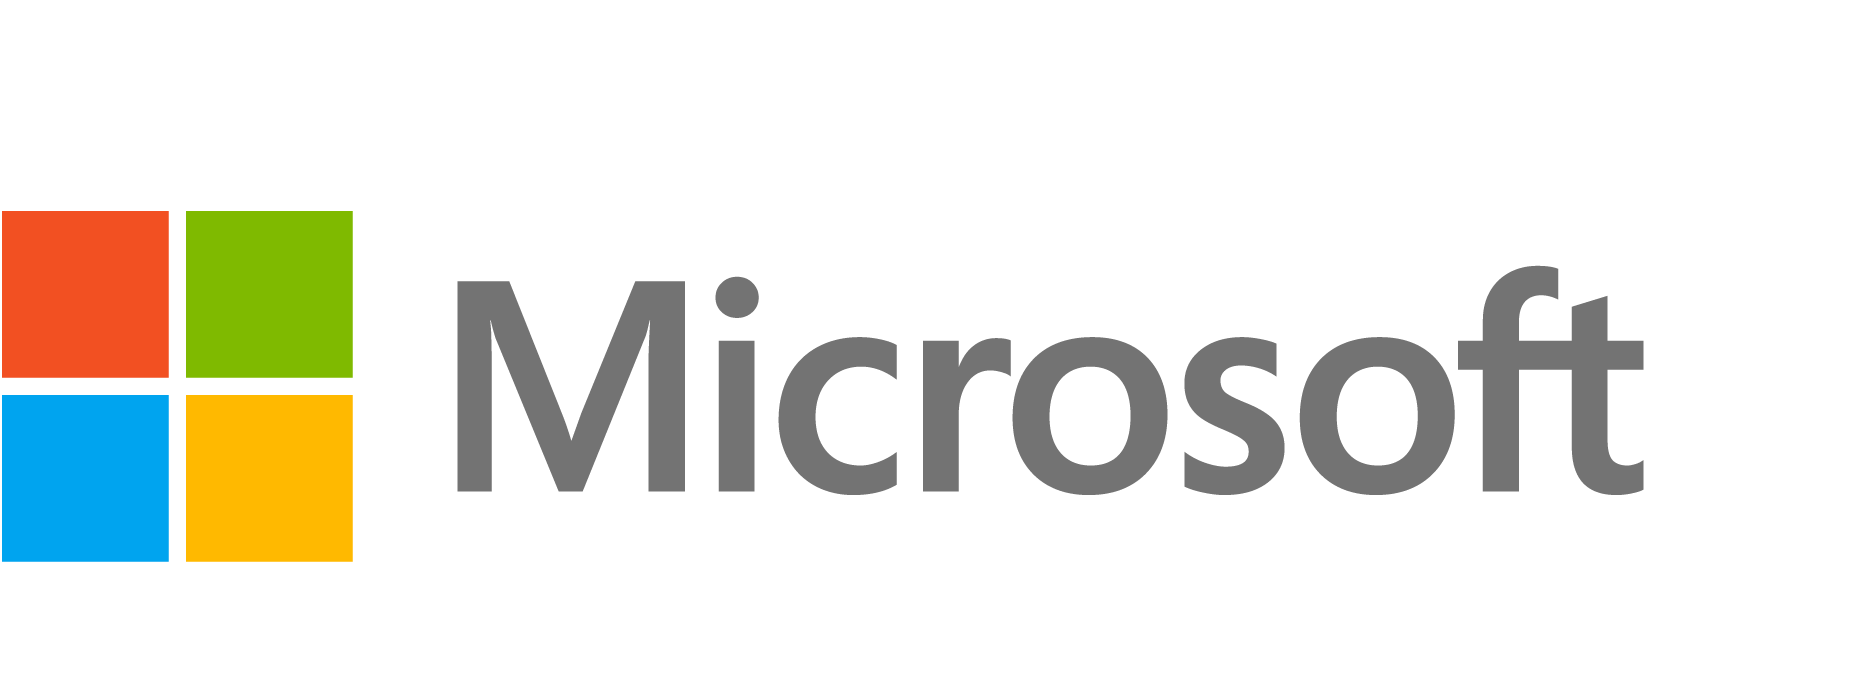 Finance Windows Logo Microsoft Gnu PNG